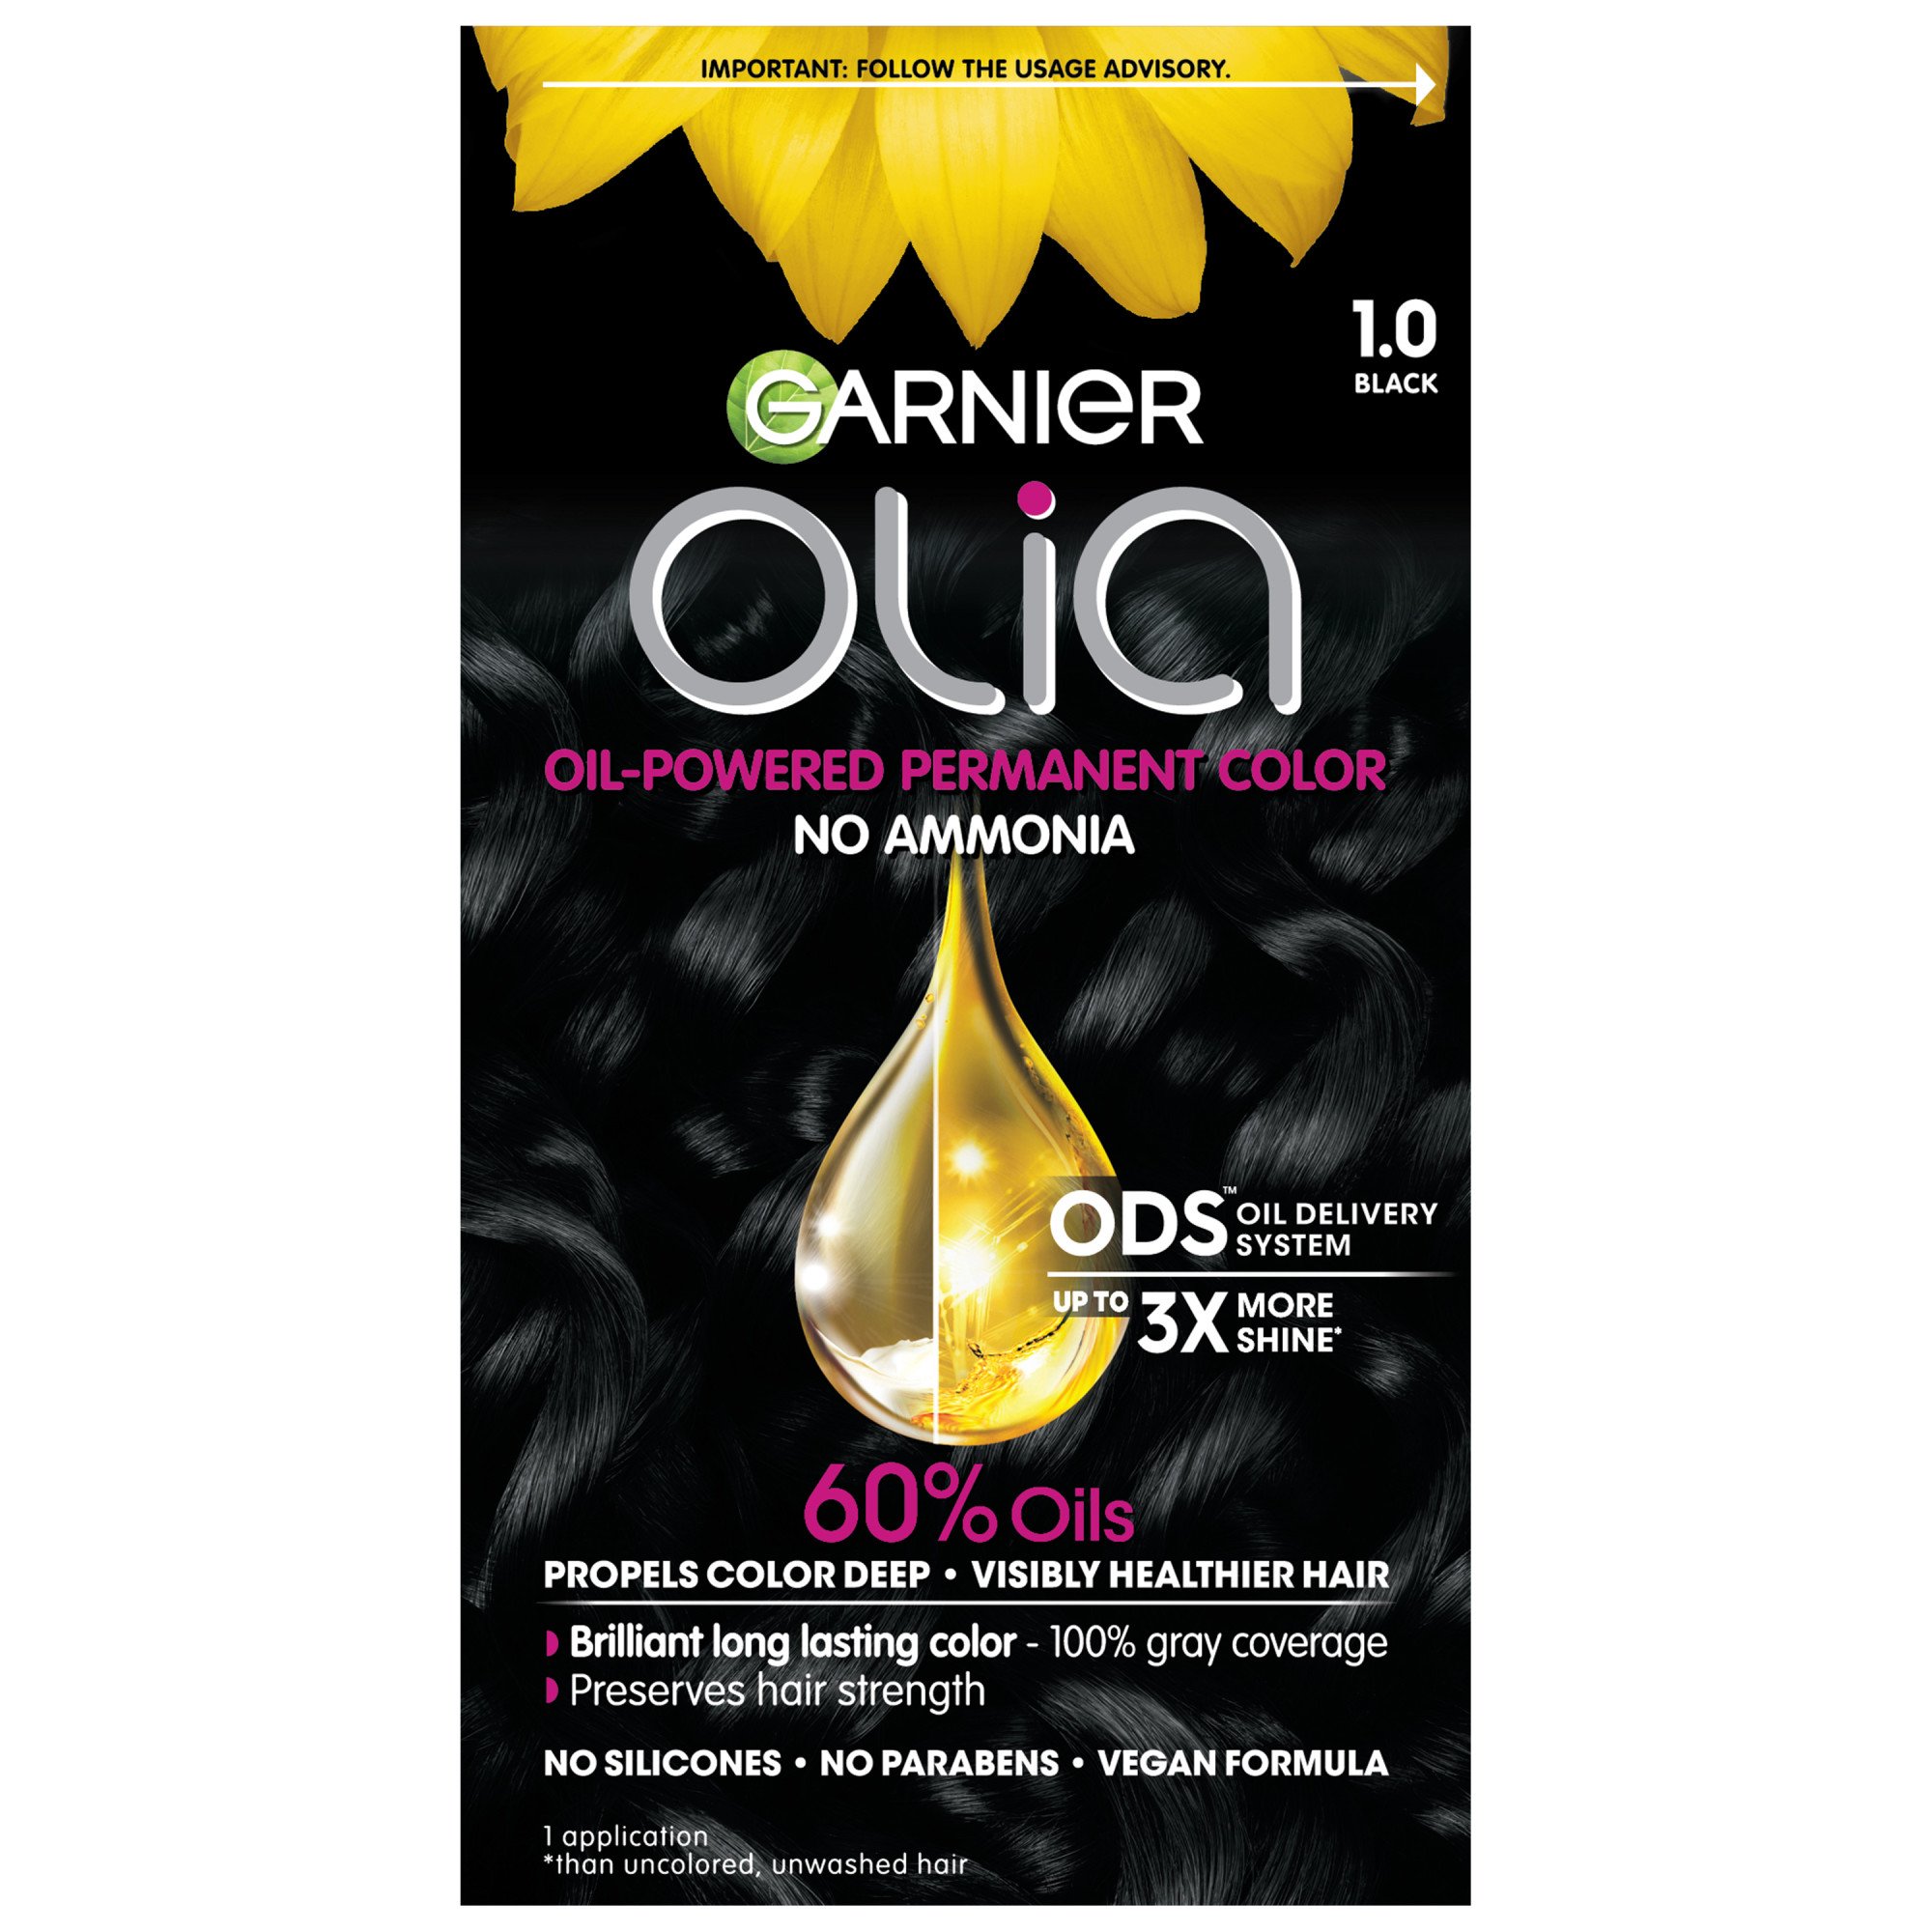 Garnier Olia Oil Powered Permanent Hair Color 1.0 Black